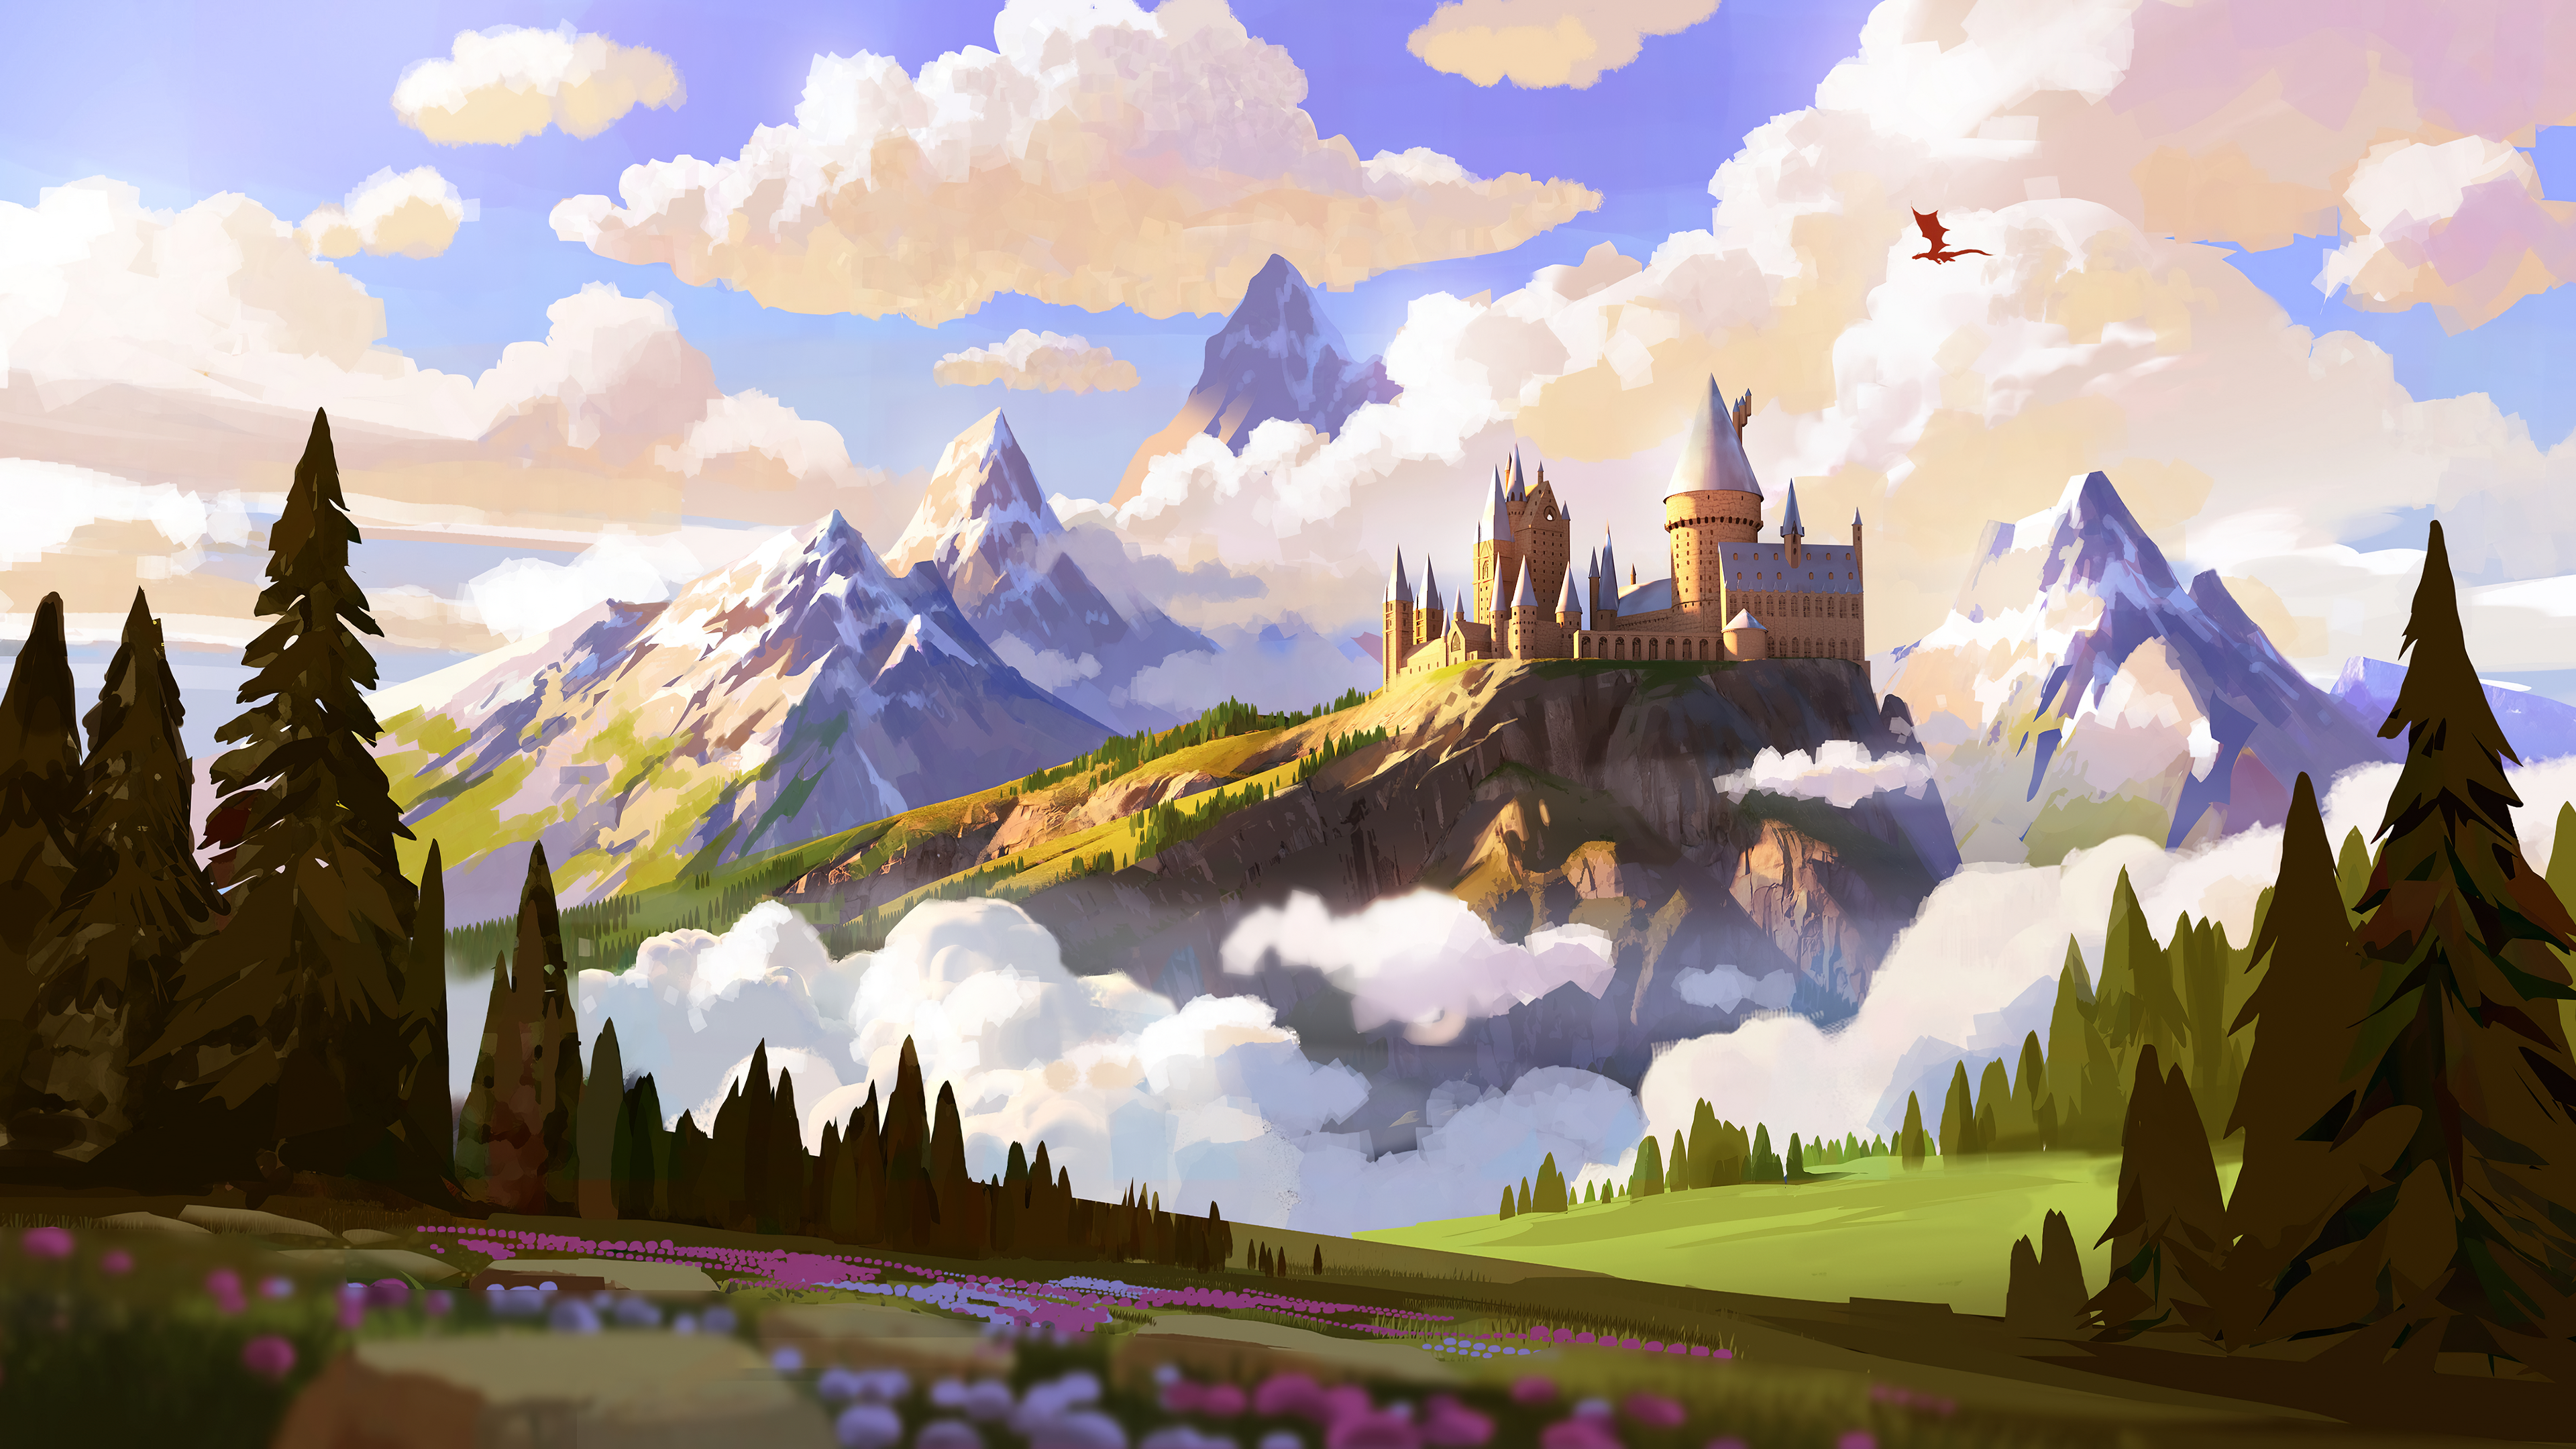 Download 4k Wallpaper: Hogwarts, Harry potter, Digital art, Clouds, Trees, Mountains, C.P, 2K, 4K, 5K HD Wallpaper Free Download